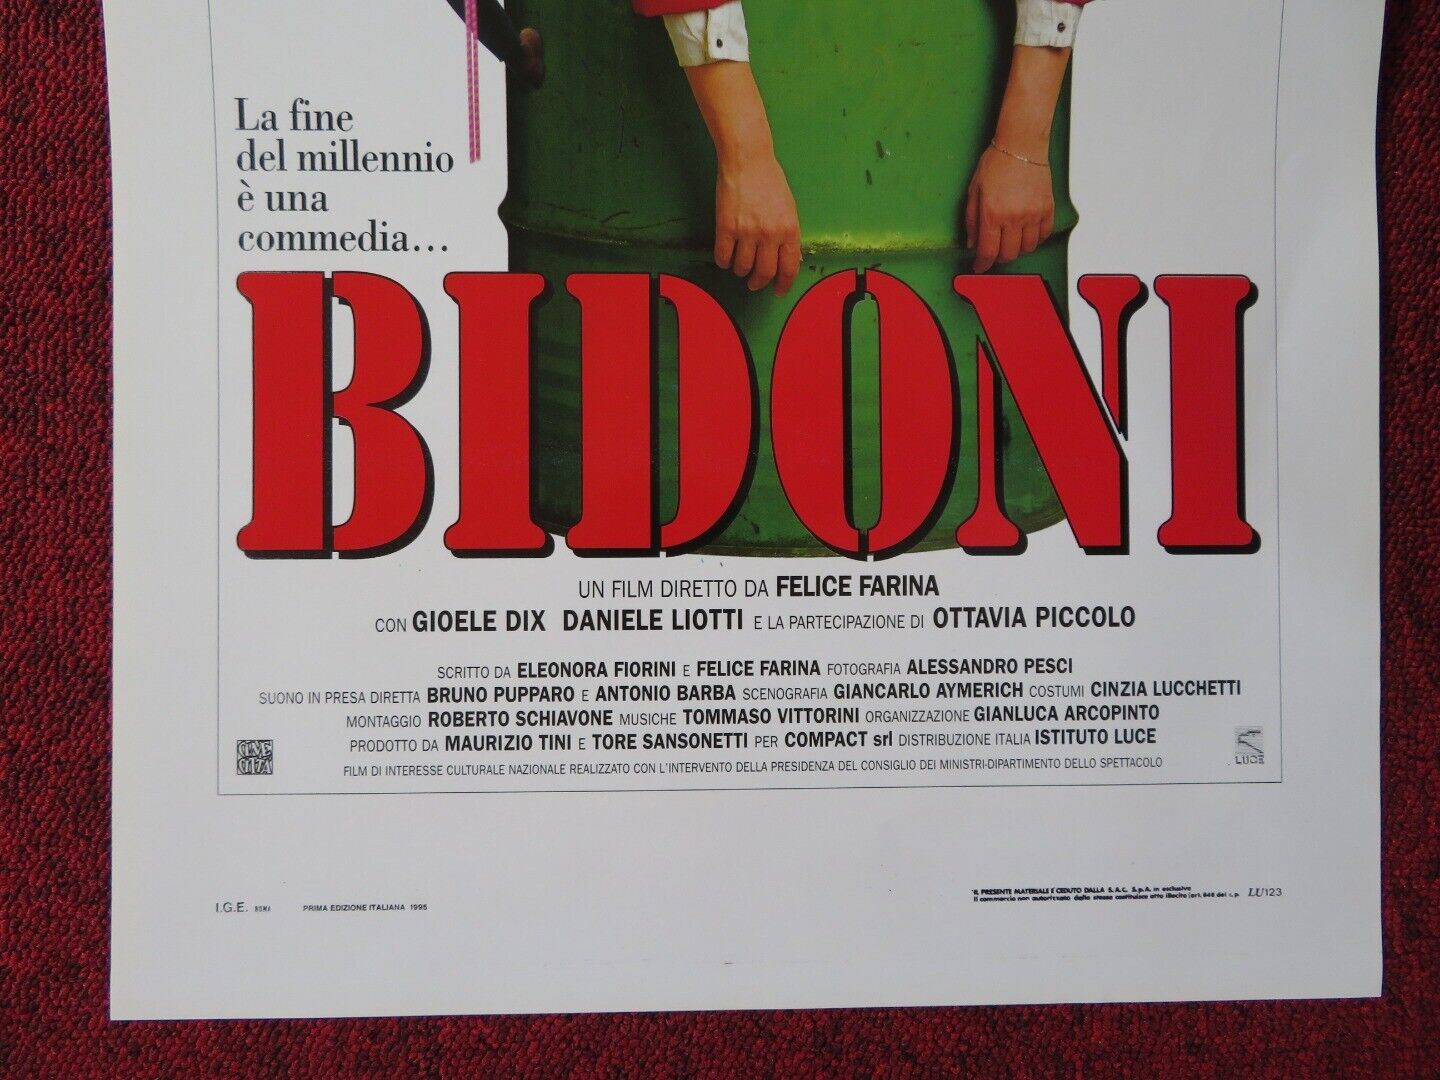 BIDONI  ITALIAN LOCANDINA (27.5"x13") POSTER ANGLA FINOCCHIARO 1995